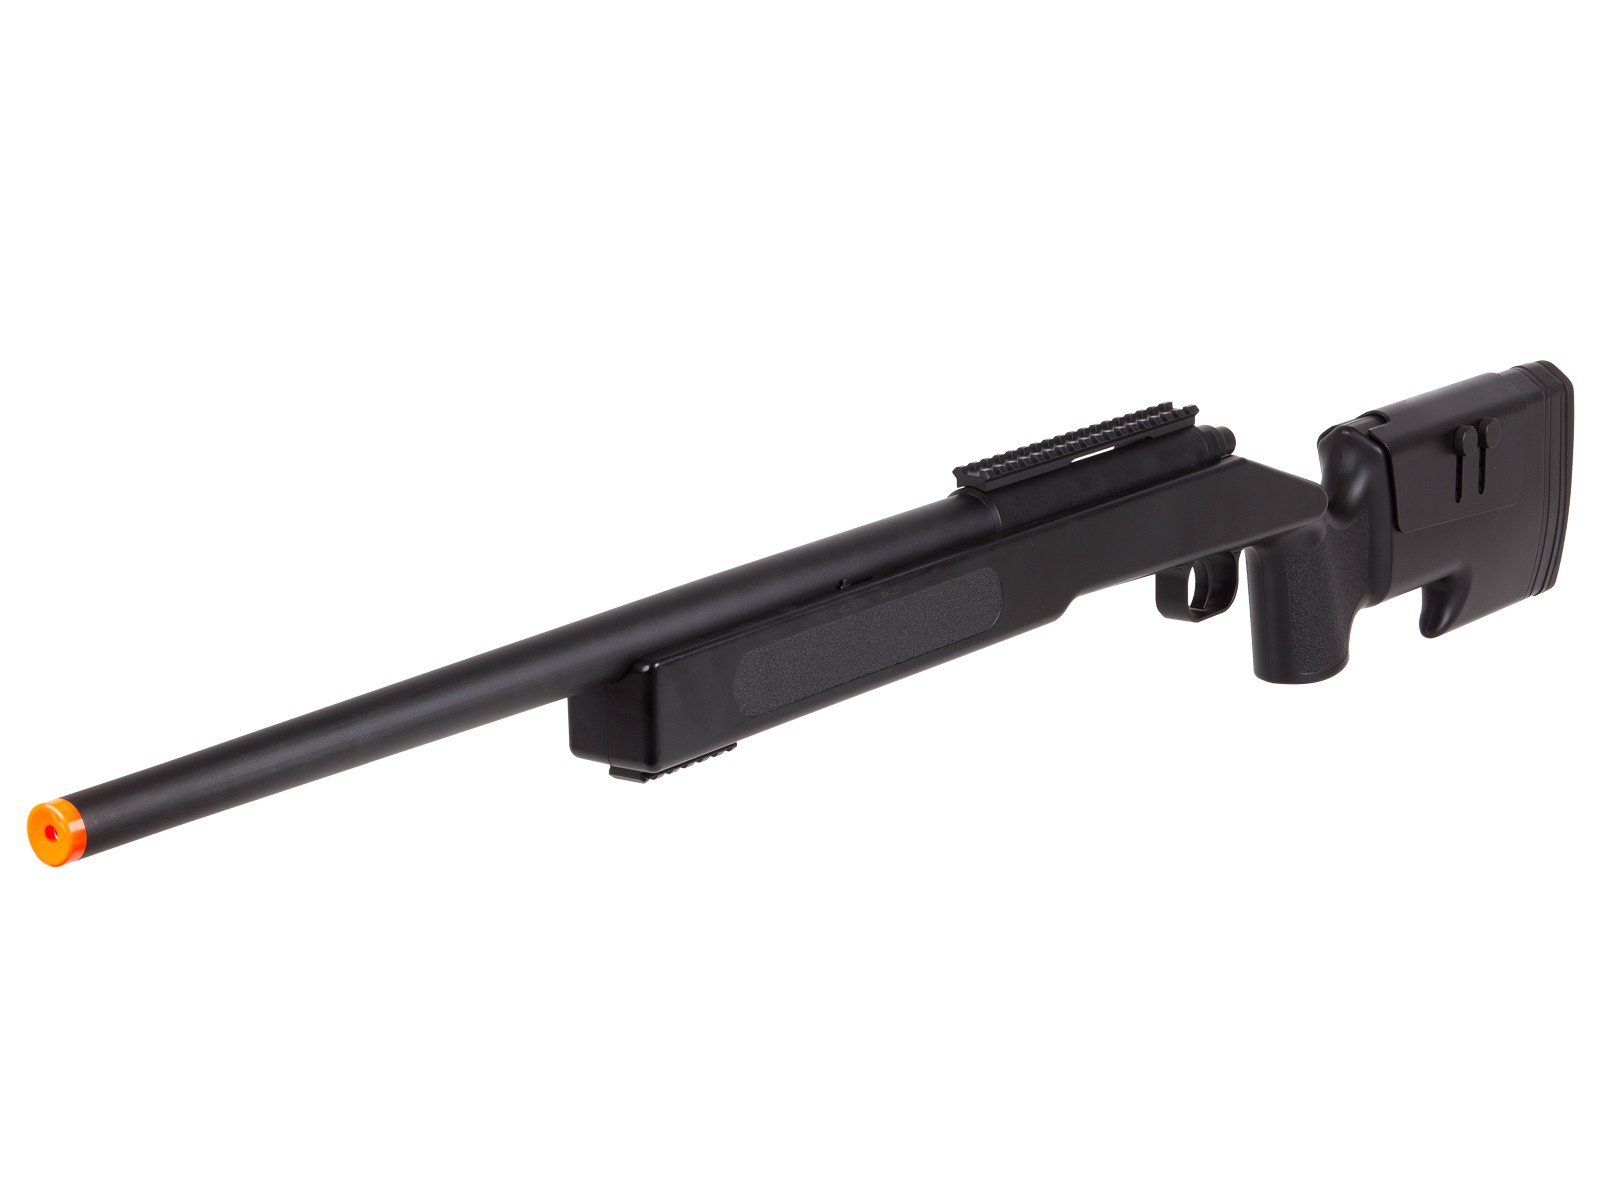 ASG M40A3 Spring Airsoft Sniper Rifle, Black 6mm